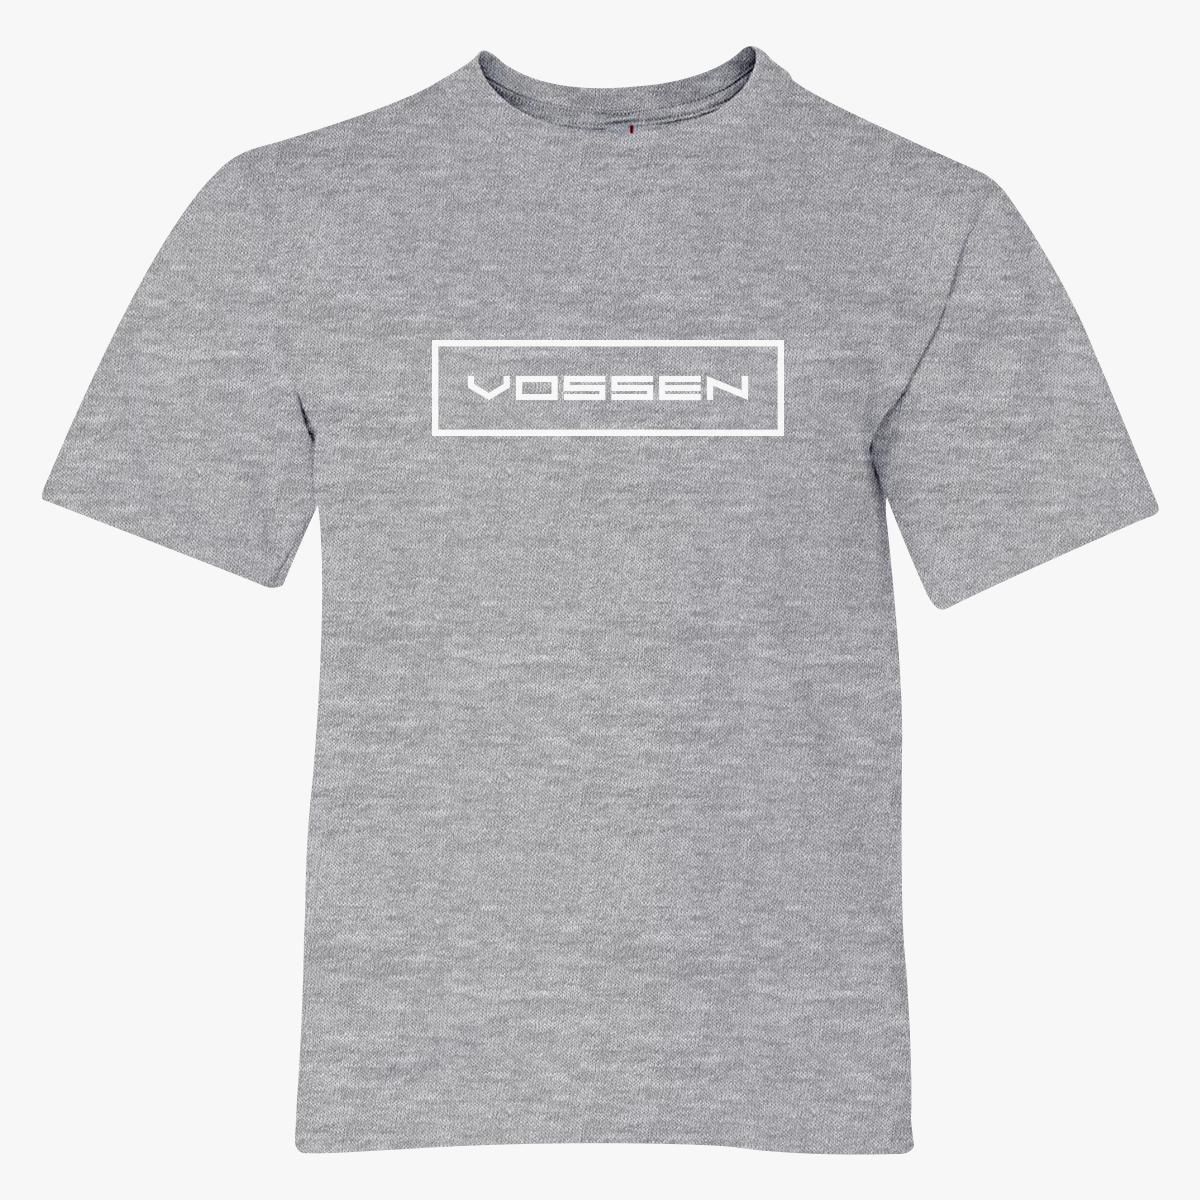 Vossen Youth T-shirt - Customon